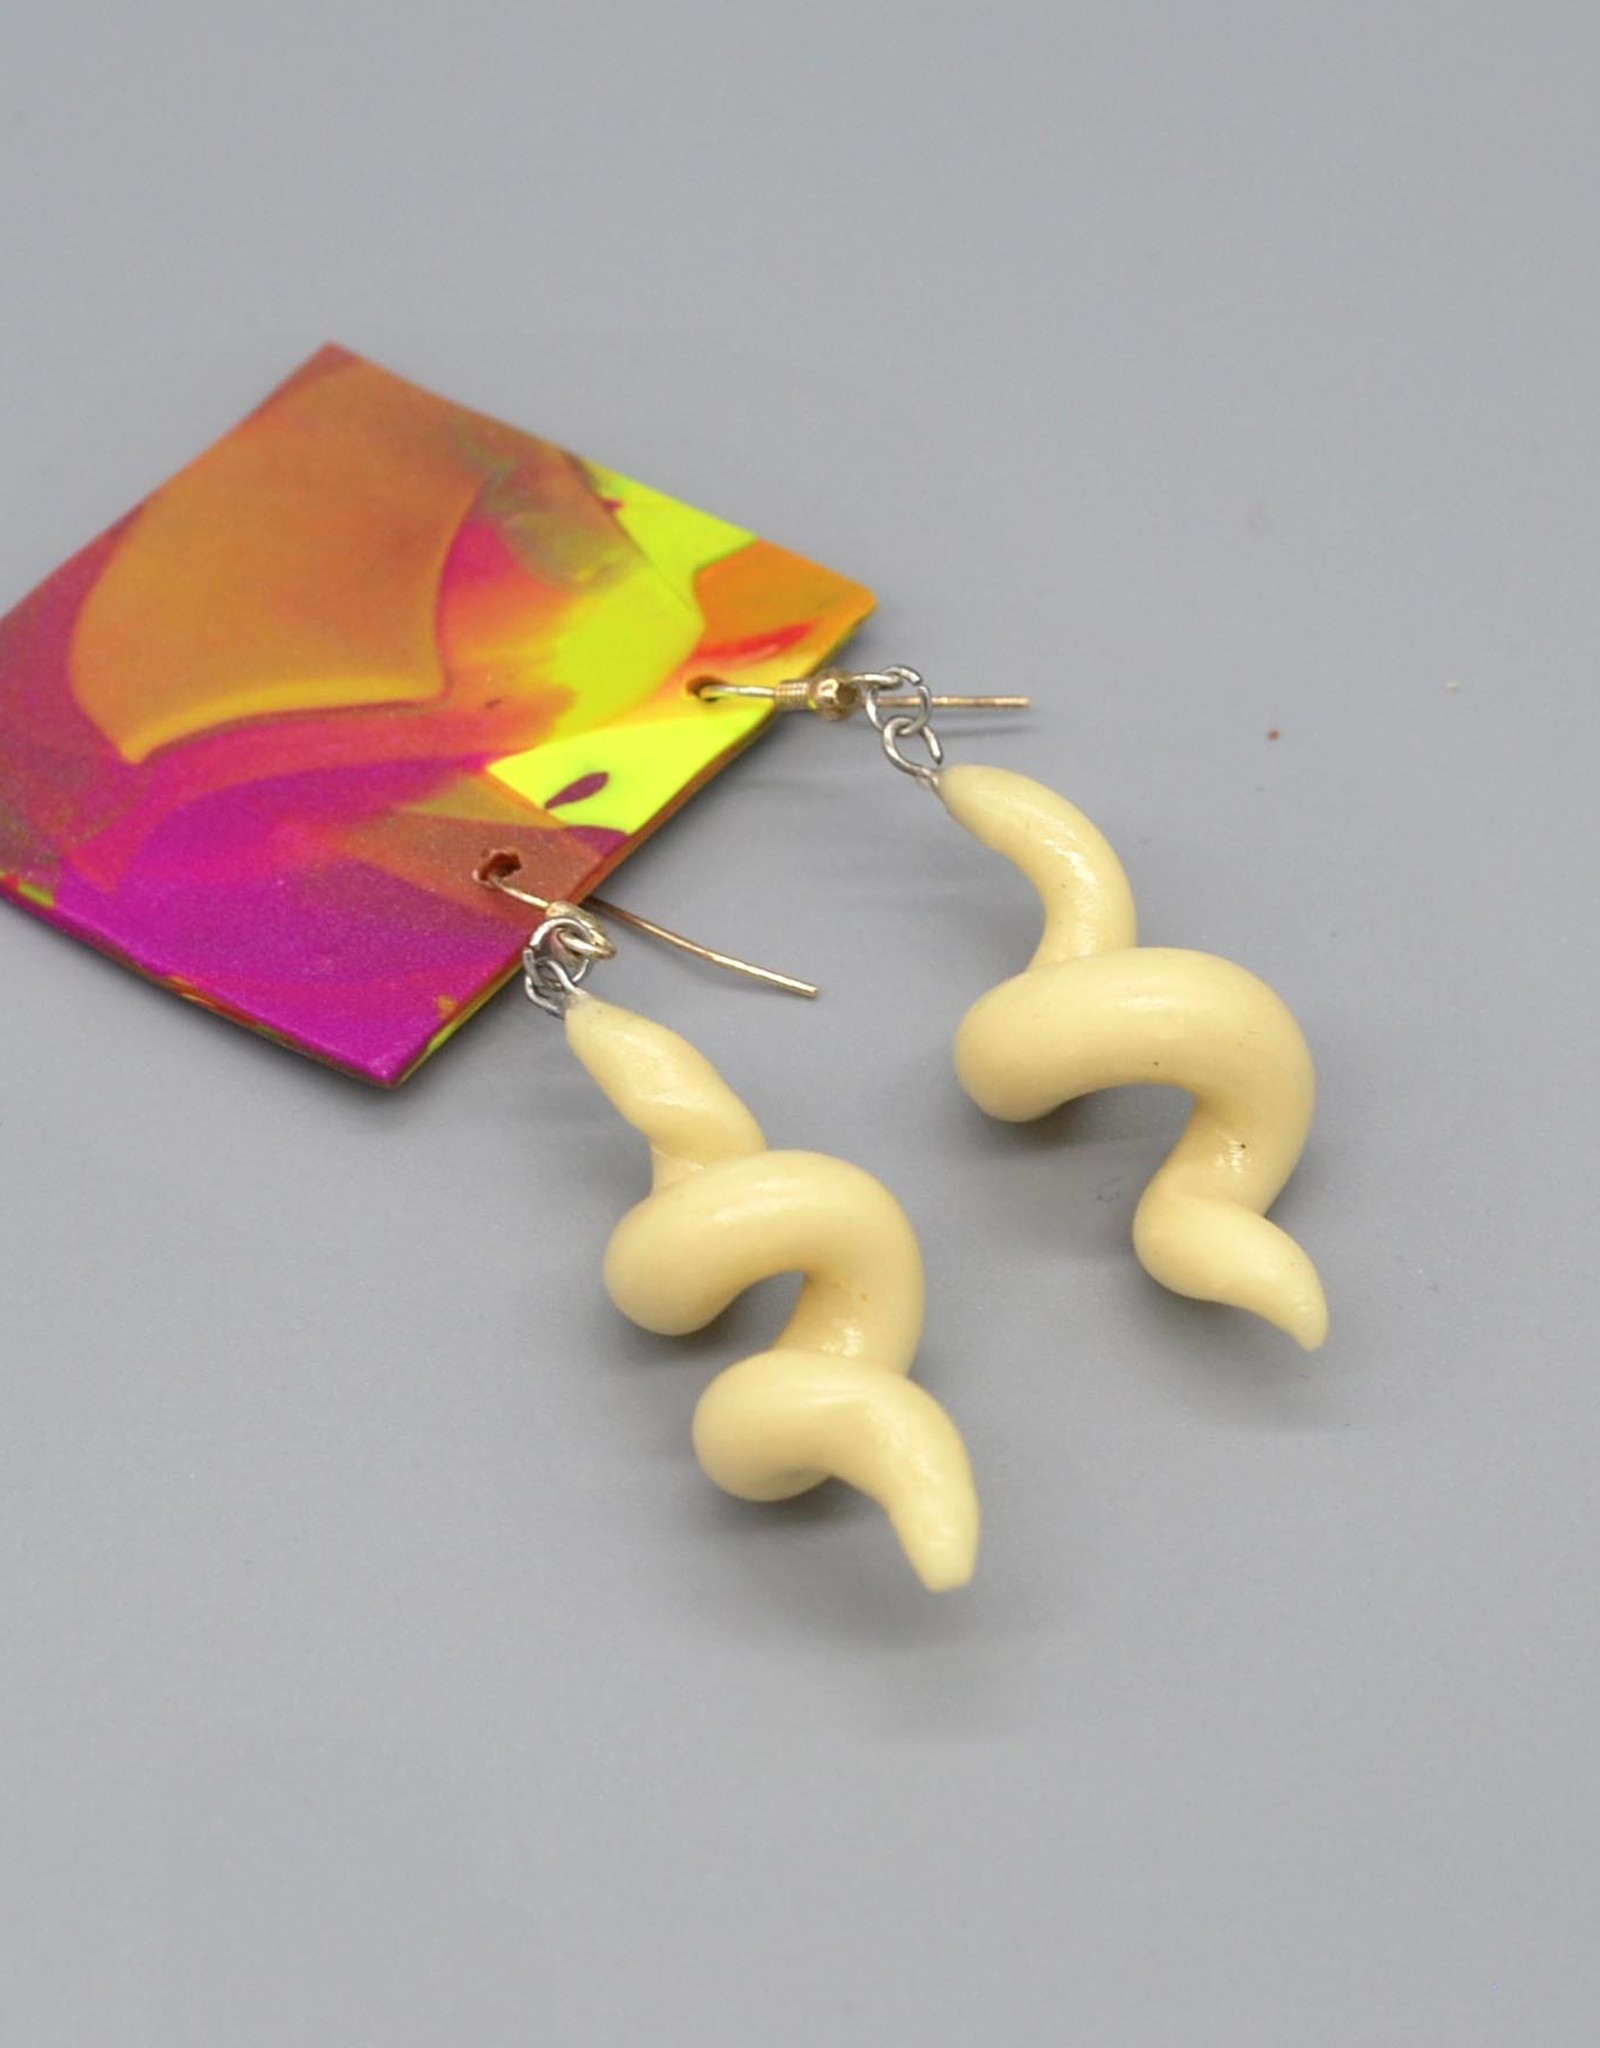 Glow in the Dark “Spiral” Pair of Earrings by GERM Jewelry